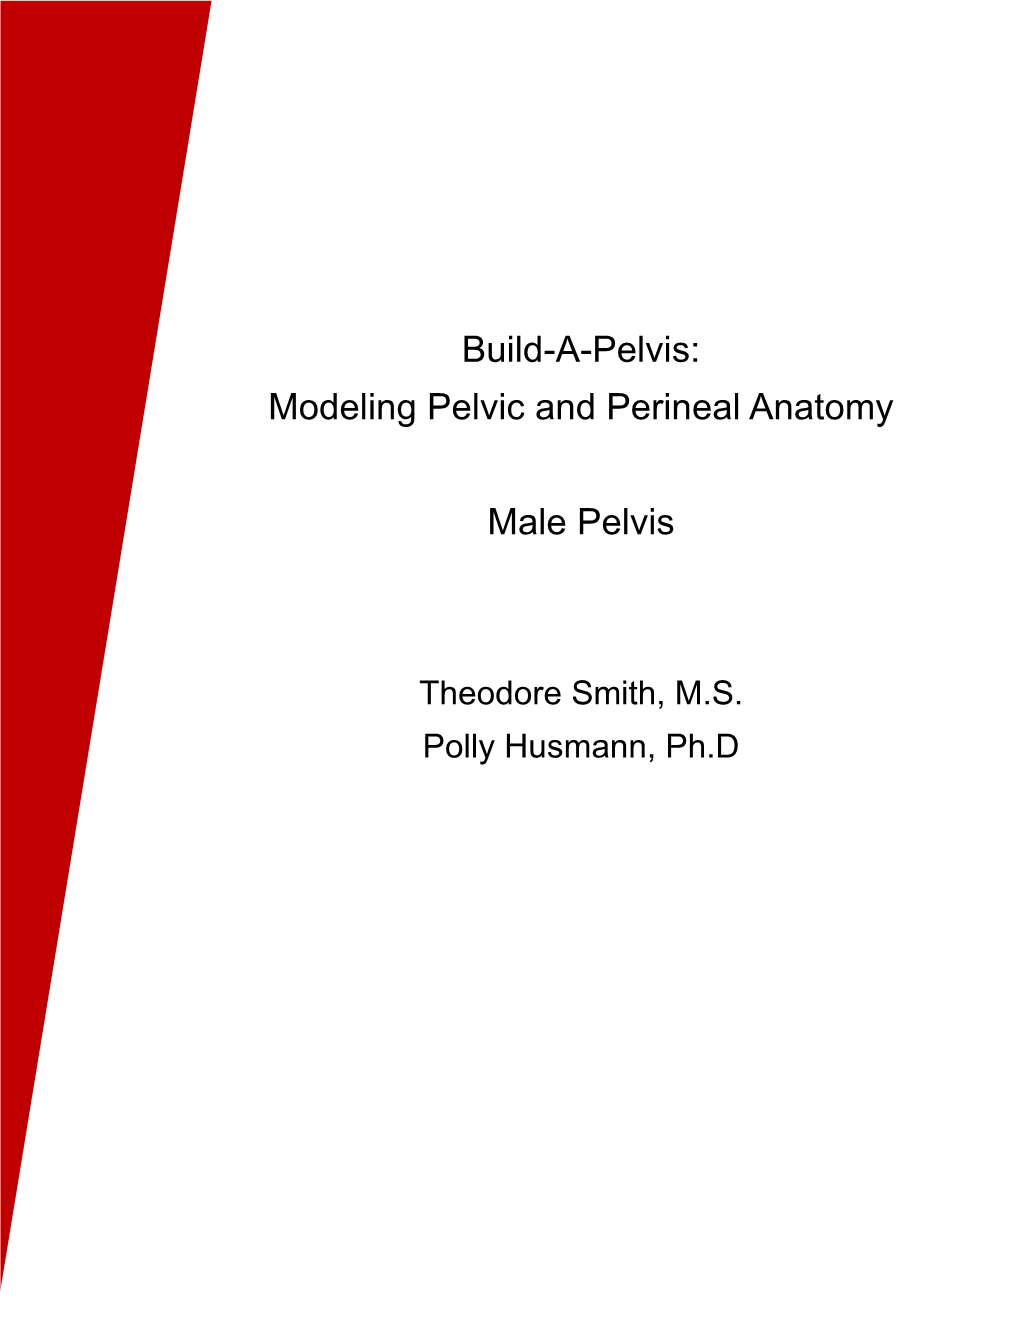 Build-A-Pelvis: Modeling Pelvic and Perineal Anatomy Male Pelvis